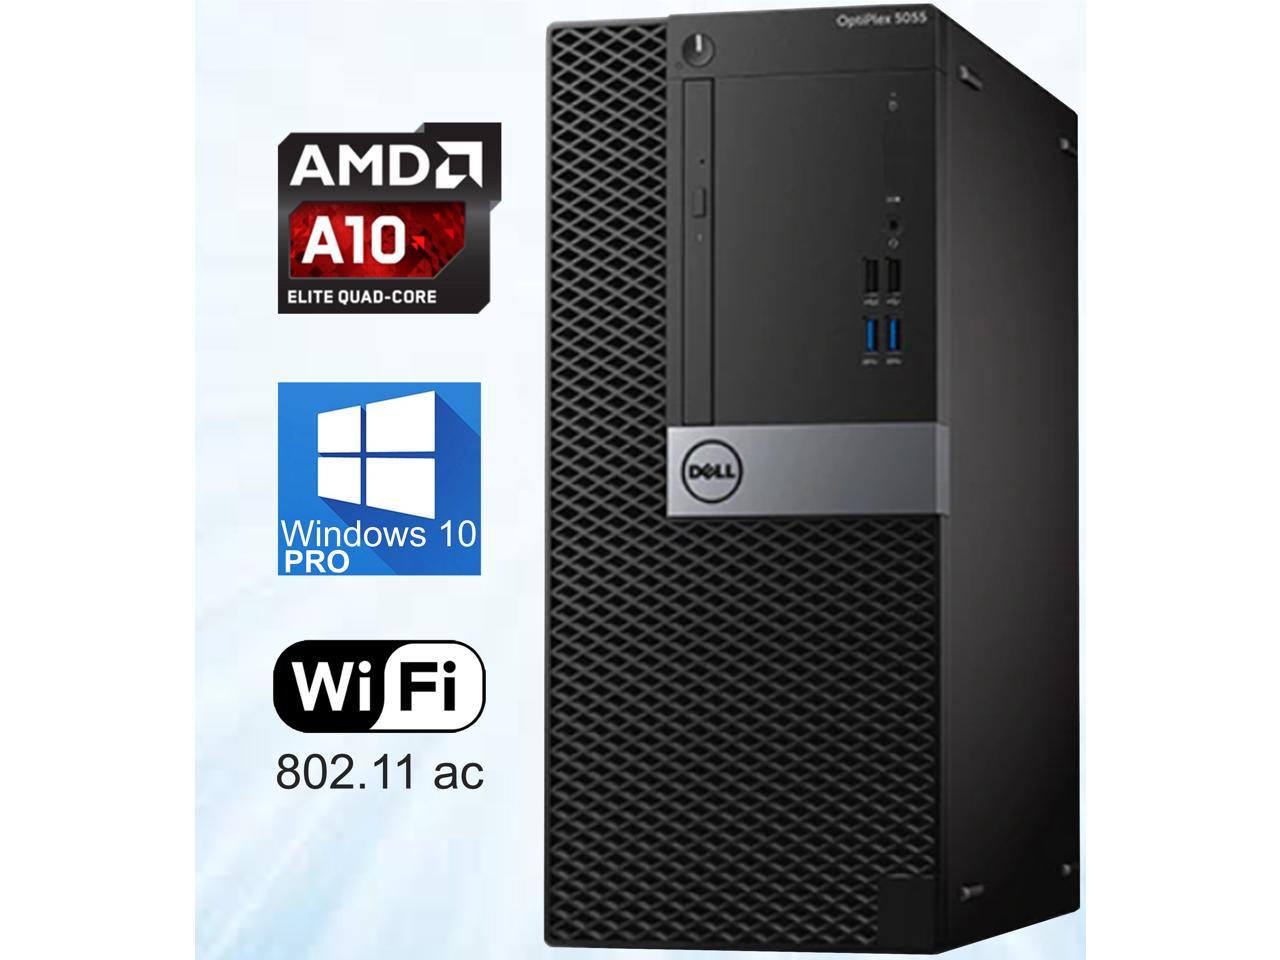 Dell Optiplex 5055 Mini-Tower, AMD 4-Core A10-9700 up to 3.8GHz, 8GB DDR4, 128GB NVMe SSD + 500GB HDD, USB 3.1, WiFi, Bluetooth, 4K UHD 2-Monitor Support, Display Port, HDMI, DVDRW, Windows 10 Pro